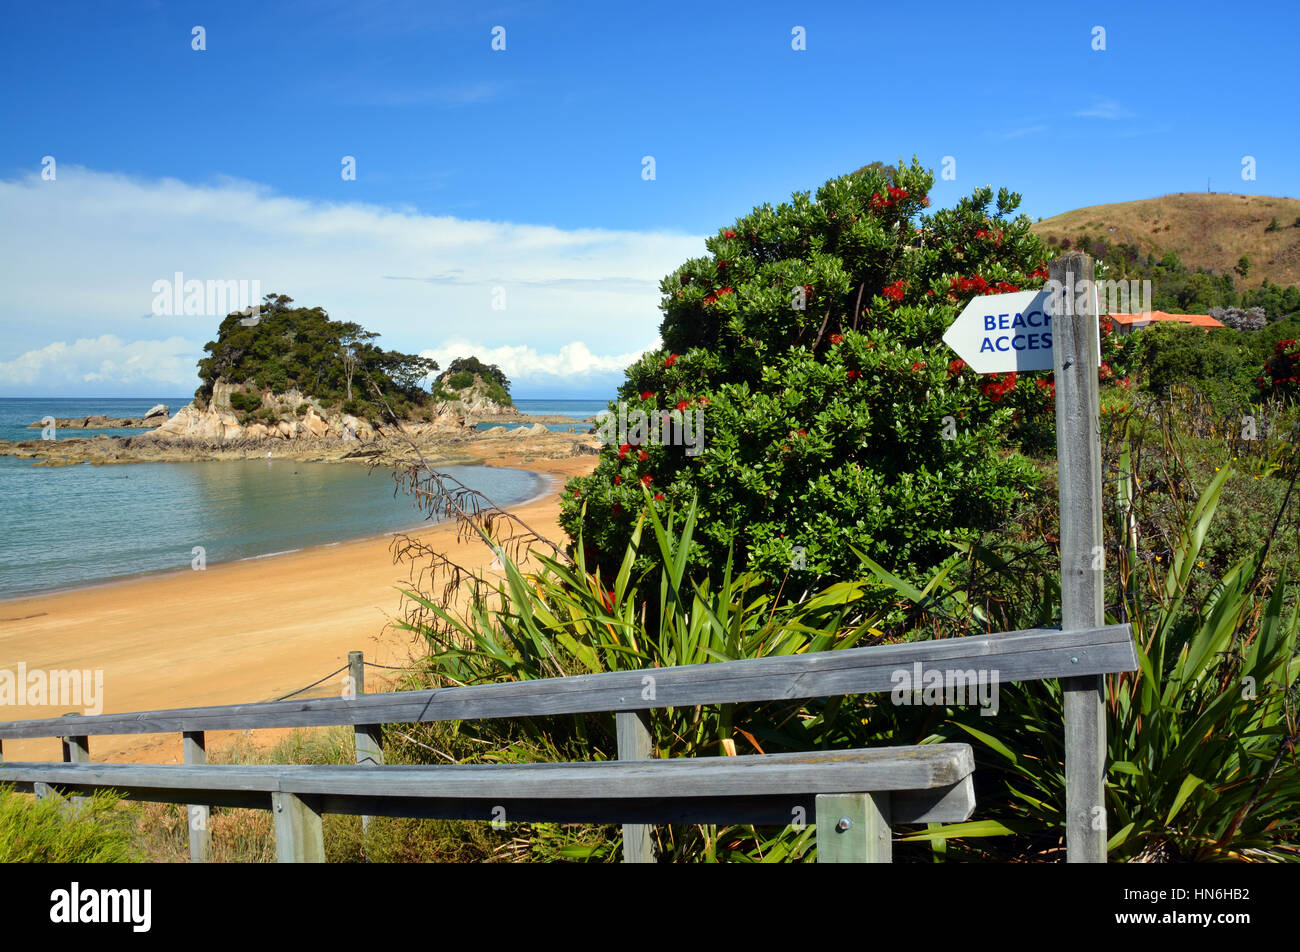 This way to Paradise. Beach Access Sign at Kaiteriteri Beach, New Zealand. Stock Photo